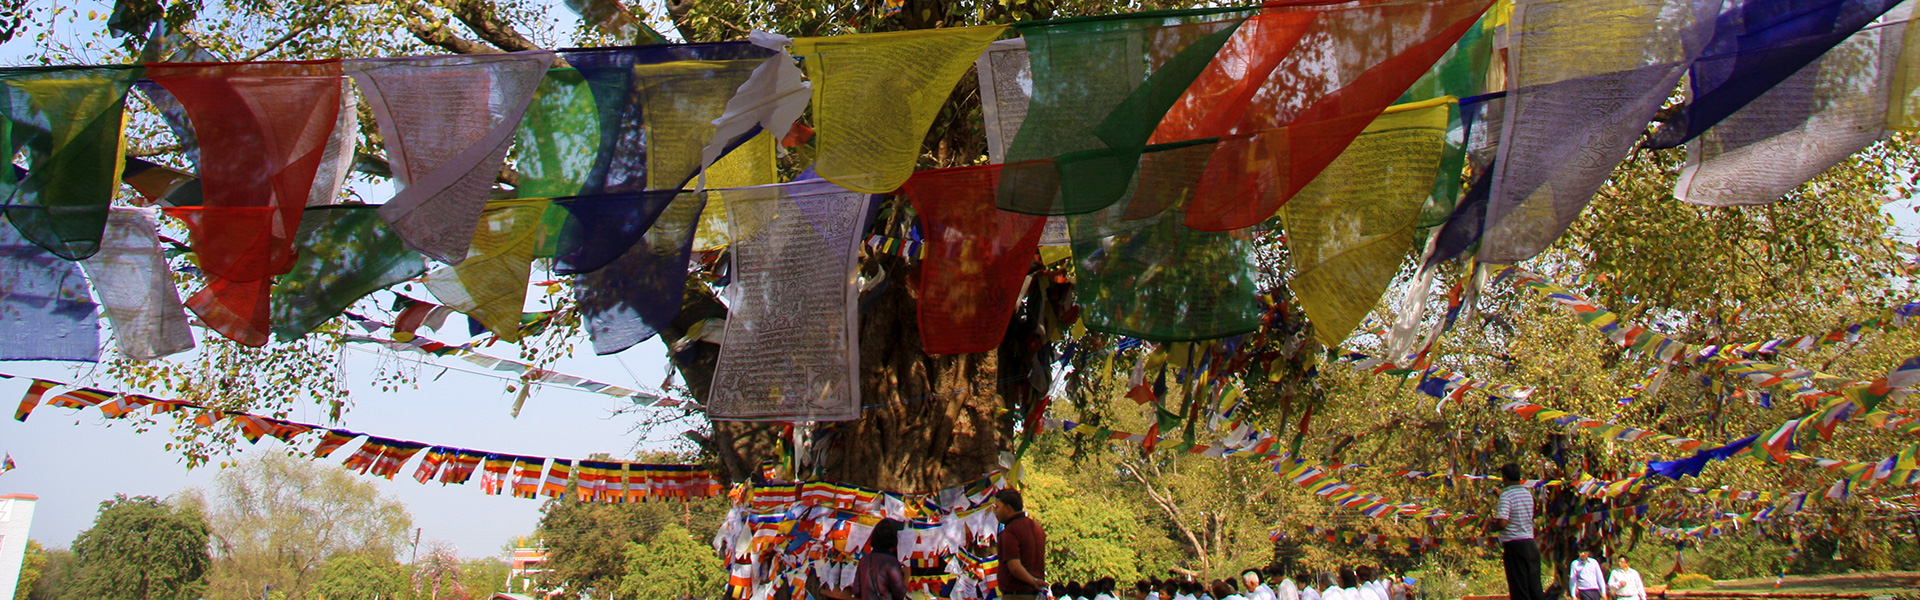 nepal-prayer-flags-in-tree